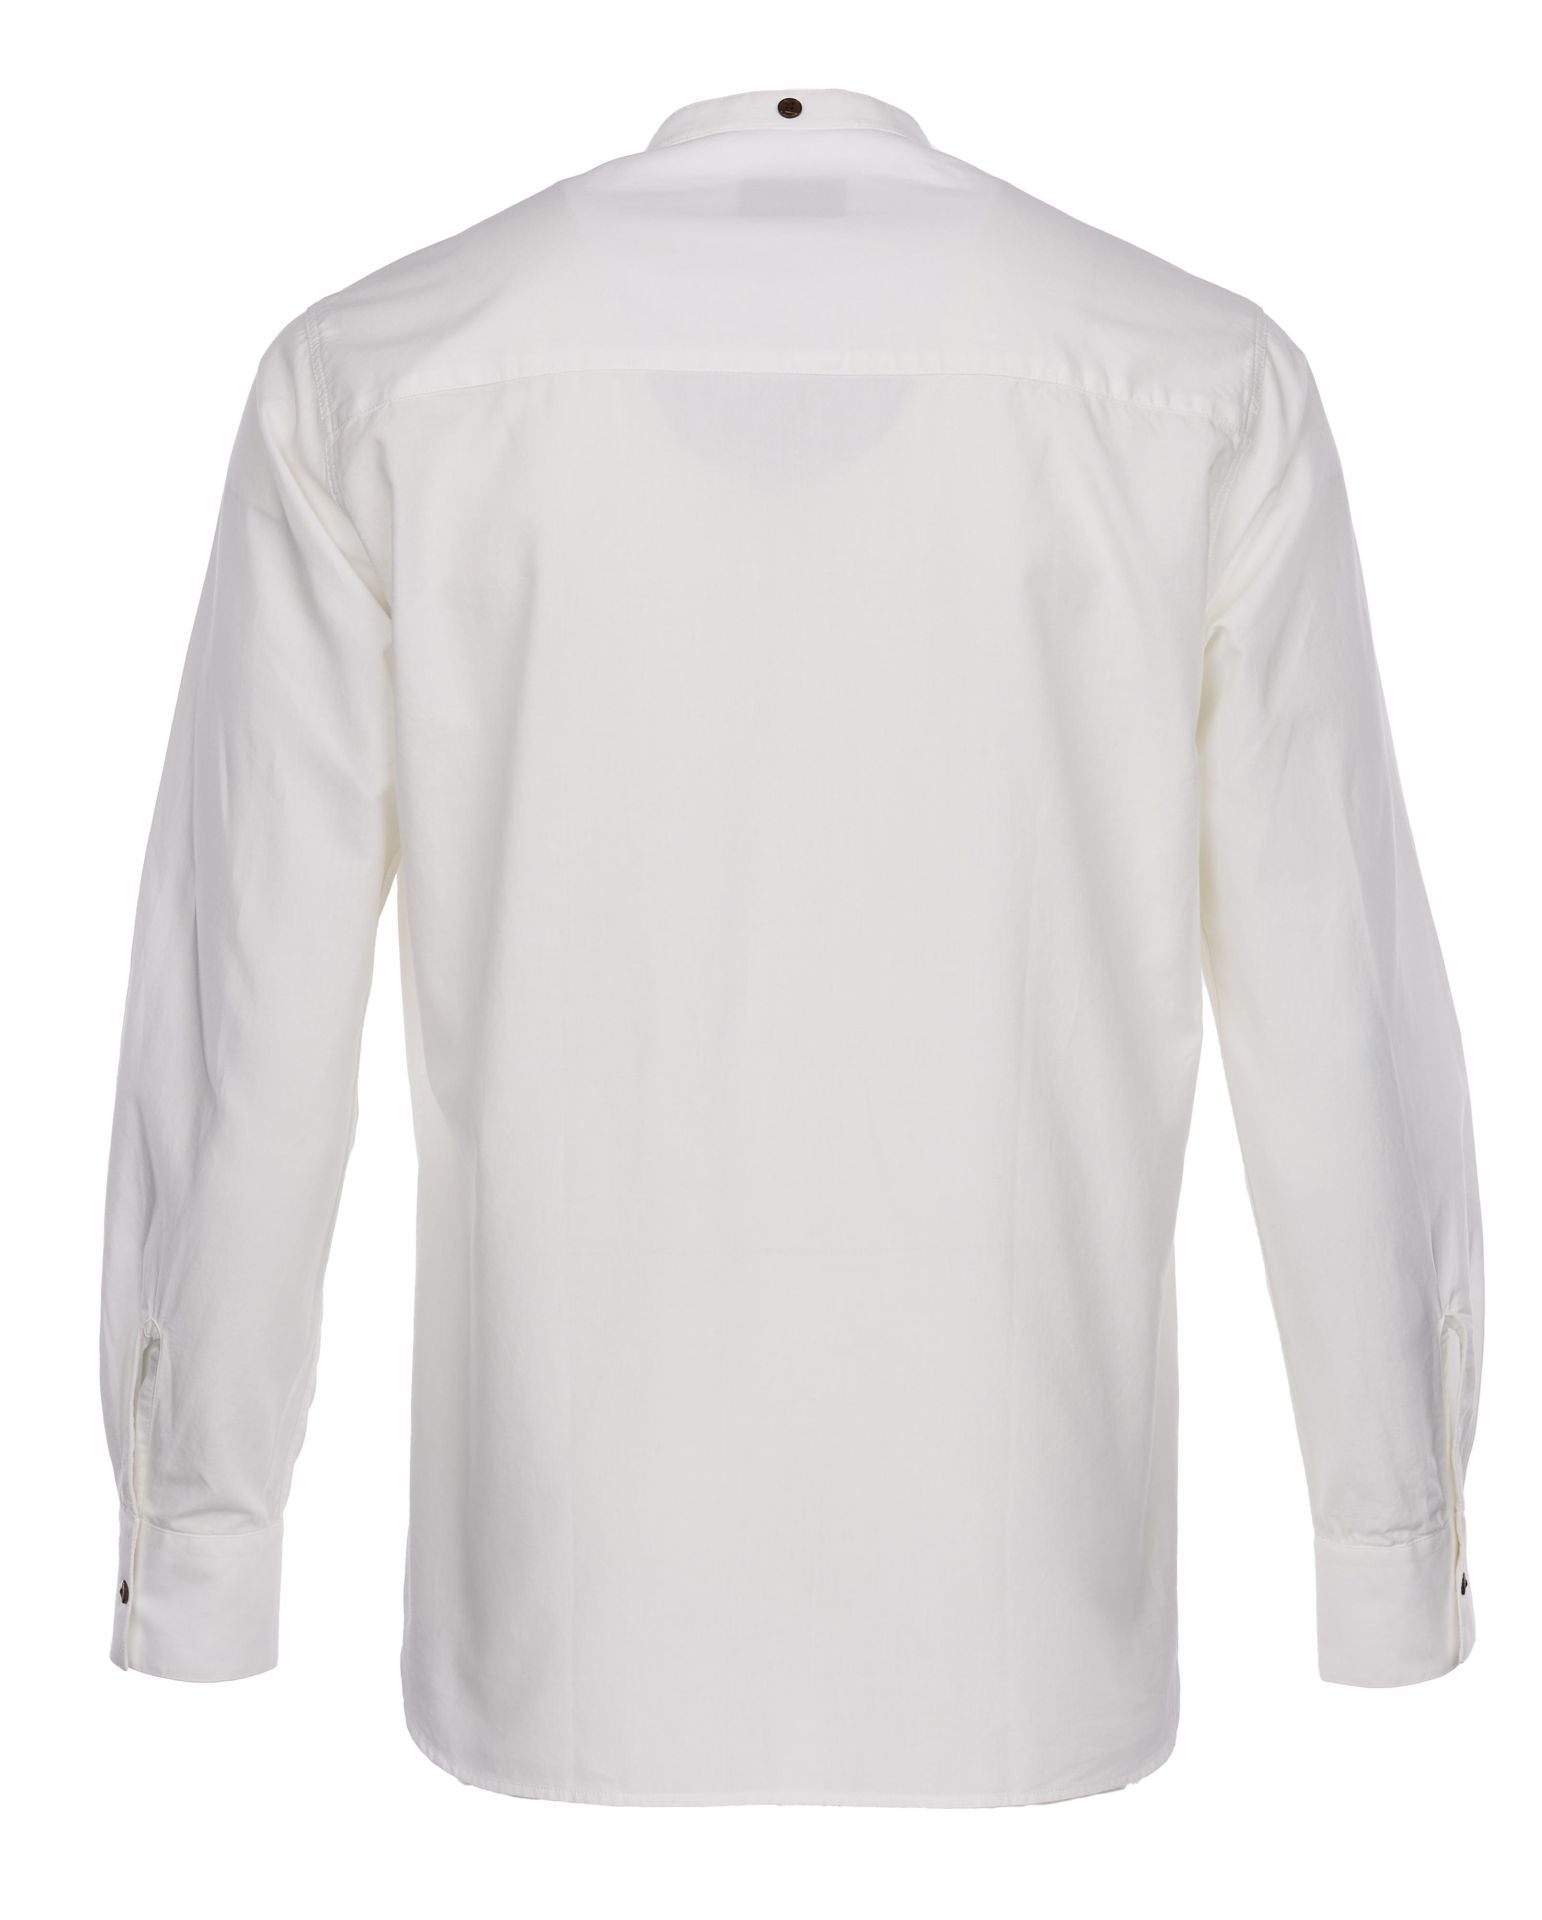 1923 Buccanoy Shirt - white chambrey - Dotty&Dan